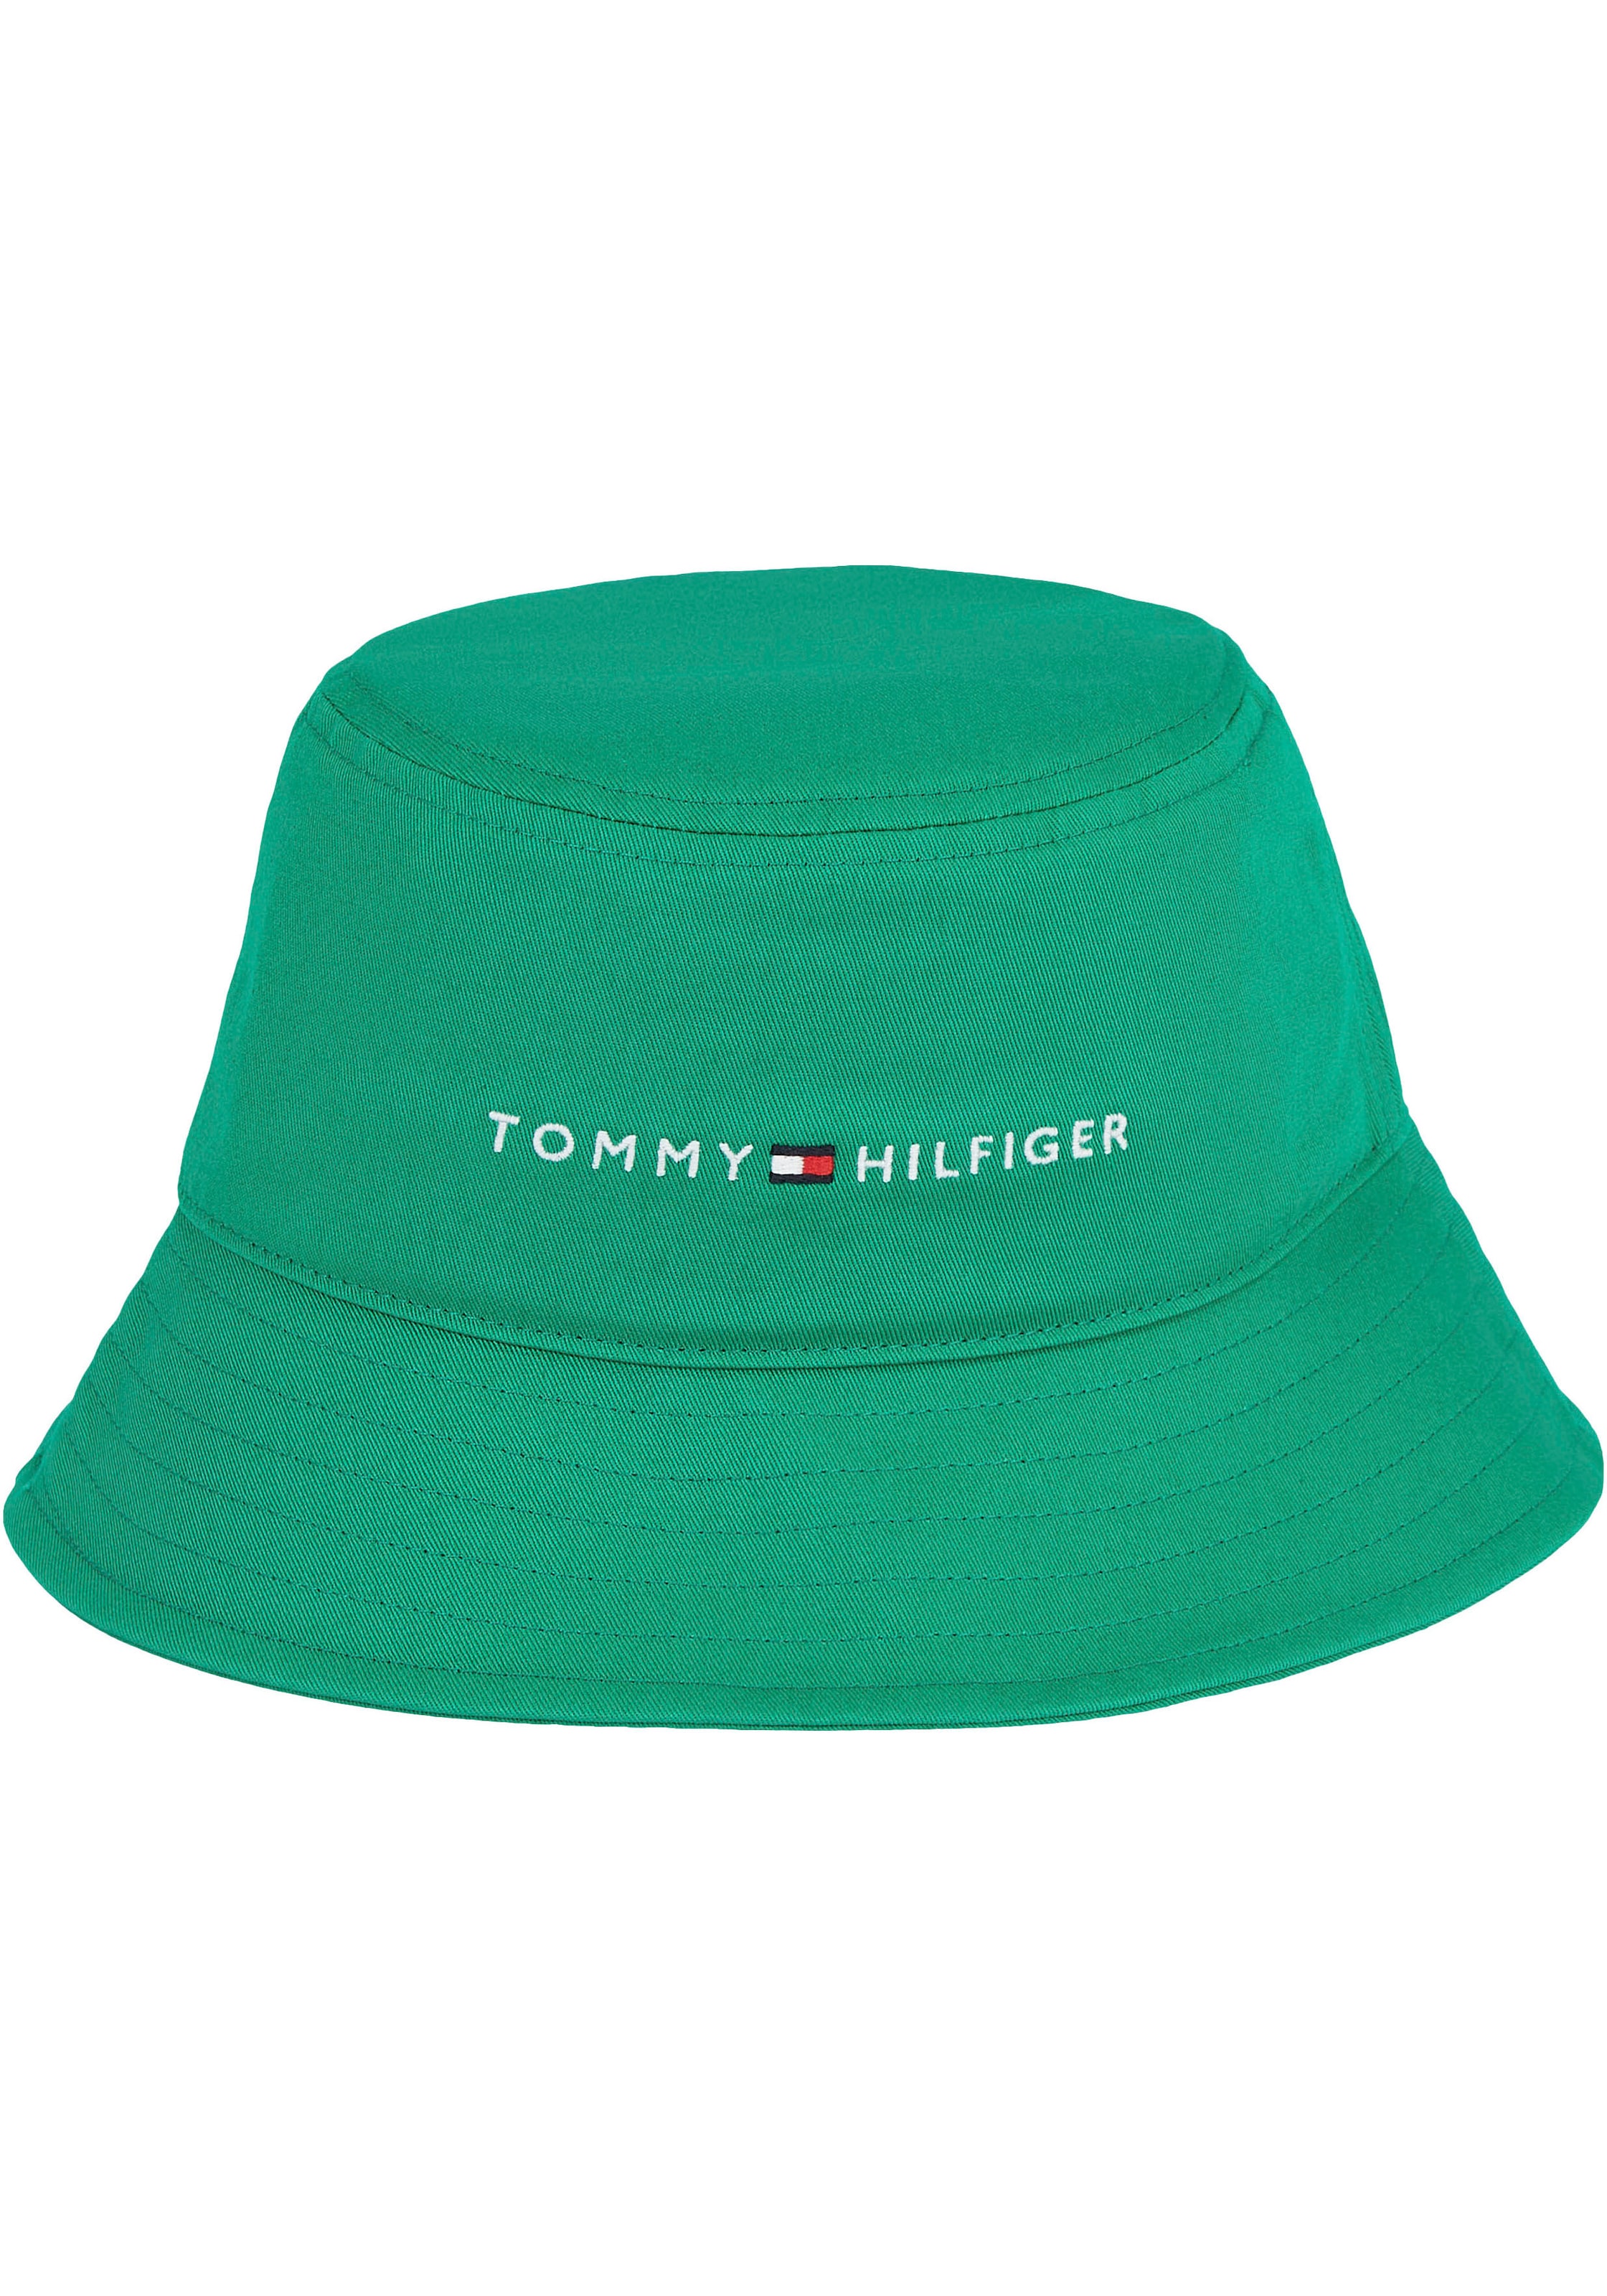 Tommy Hilfiger Fitted Cap, (1 St.), Kinder Kids Junior MiniMe,im  Colorblocking kaufen